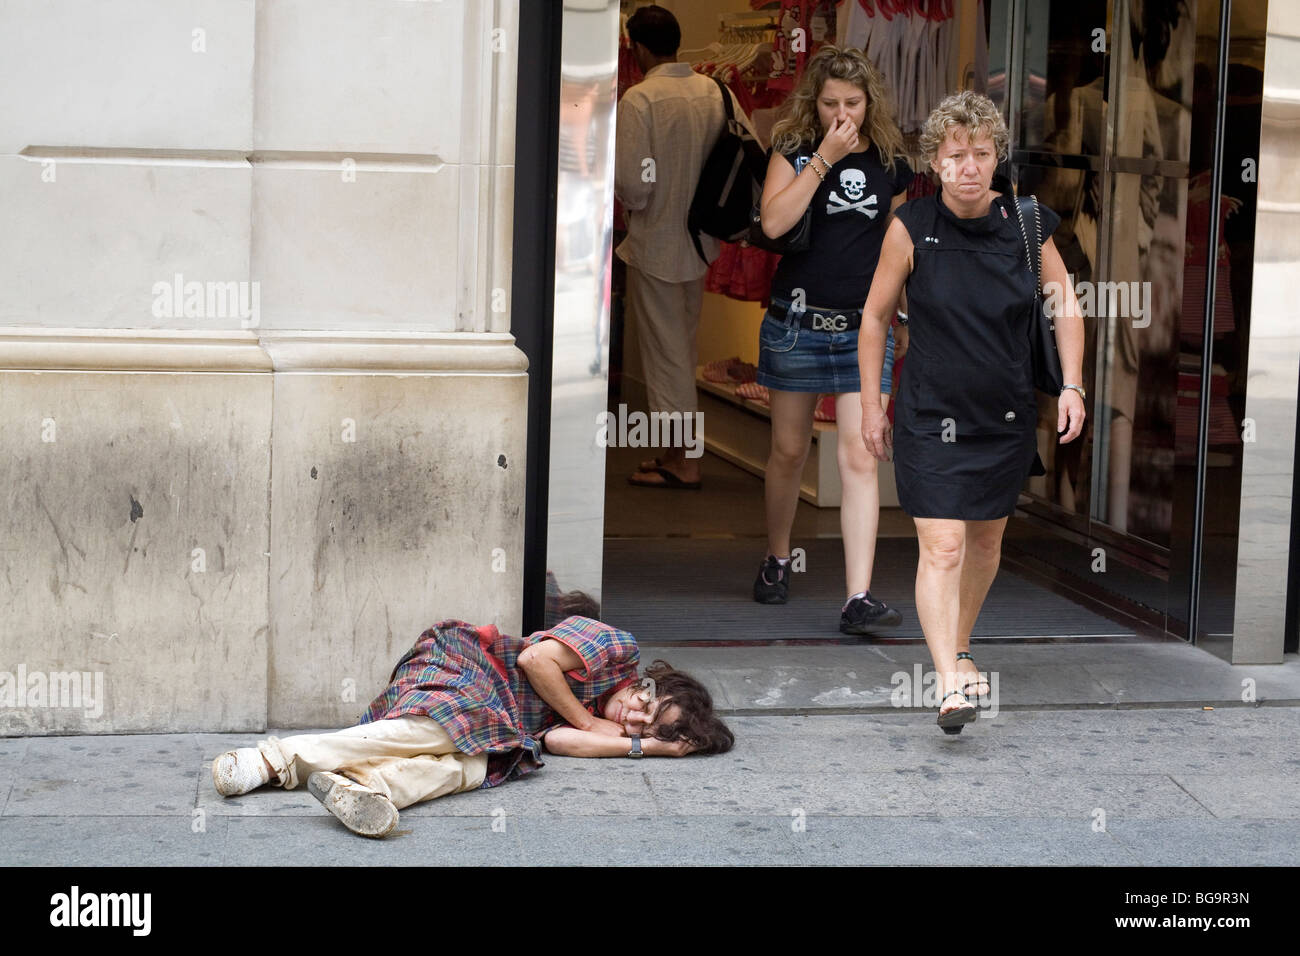 WOMAN HOLDING NOSE, HOMELESS PERSON, BARCELONA: Shopper holds nose – homeless woman asleep outside upmarket boutique Passeig de Gracia Barcelona Spain Stock Photo